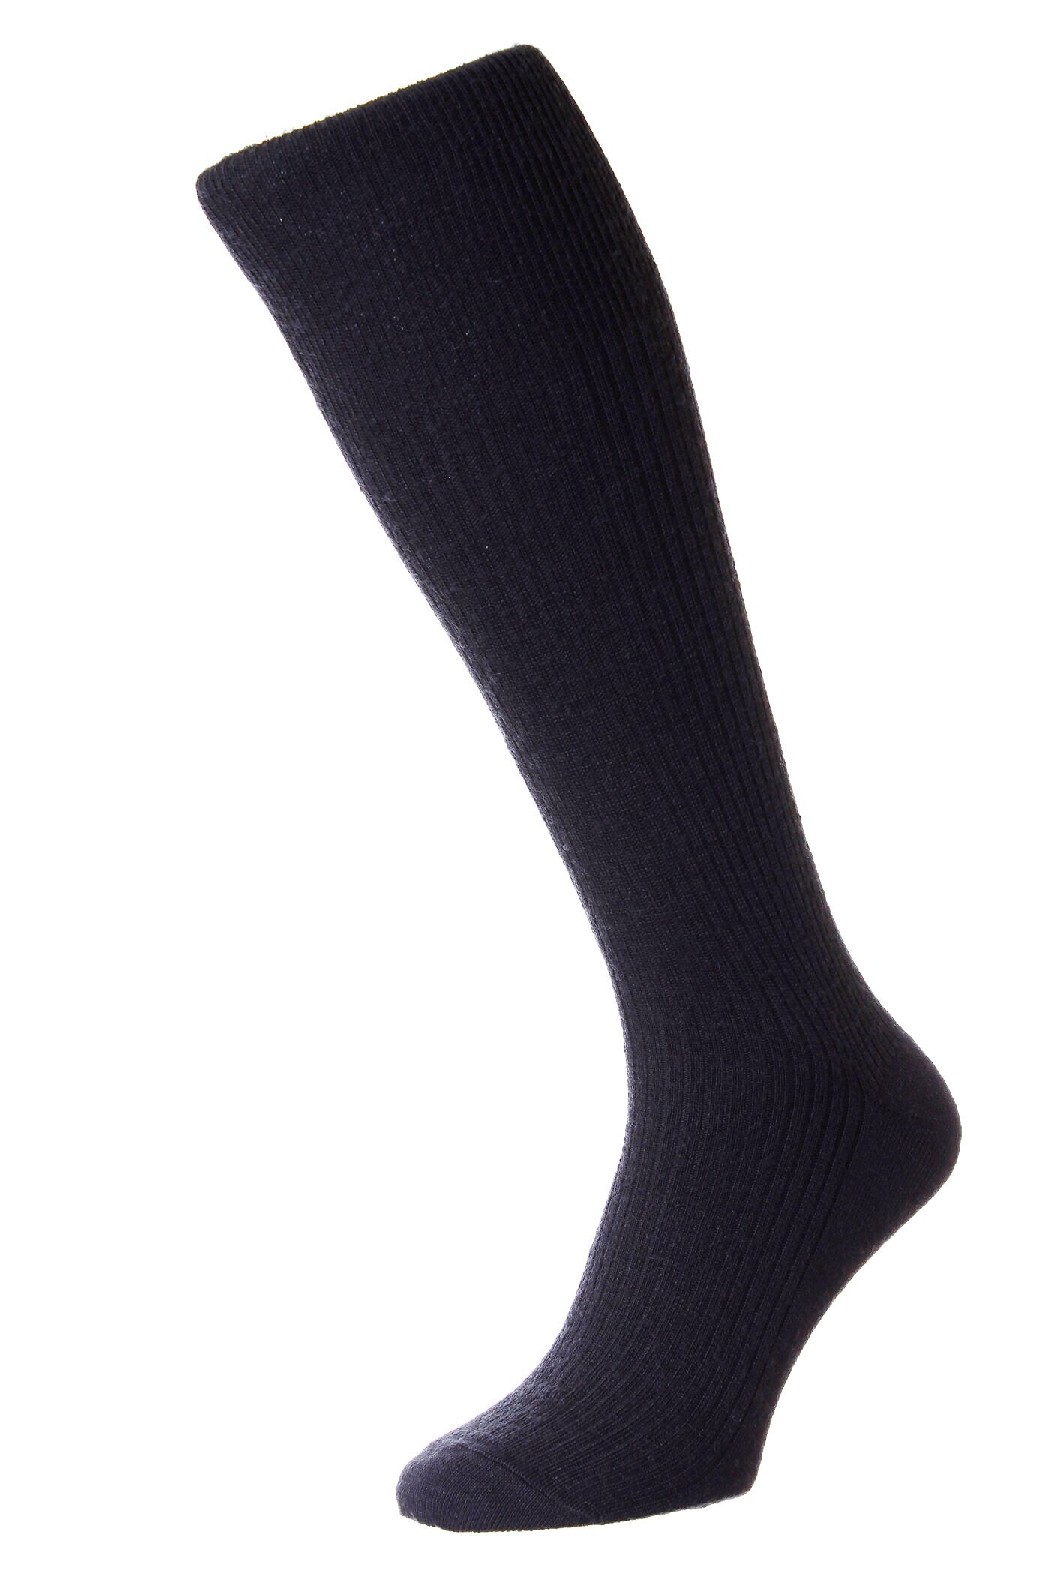 HJ Socks HJ75 Black size 6-11